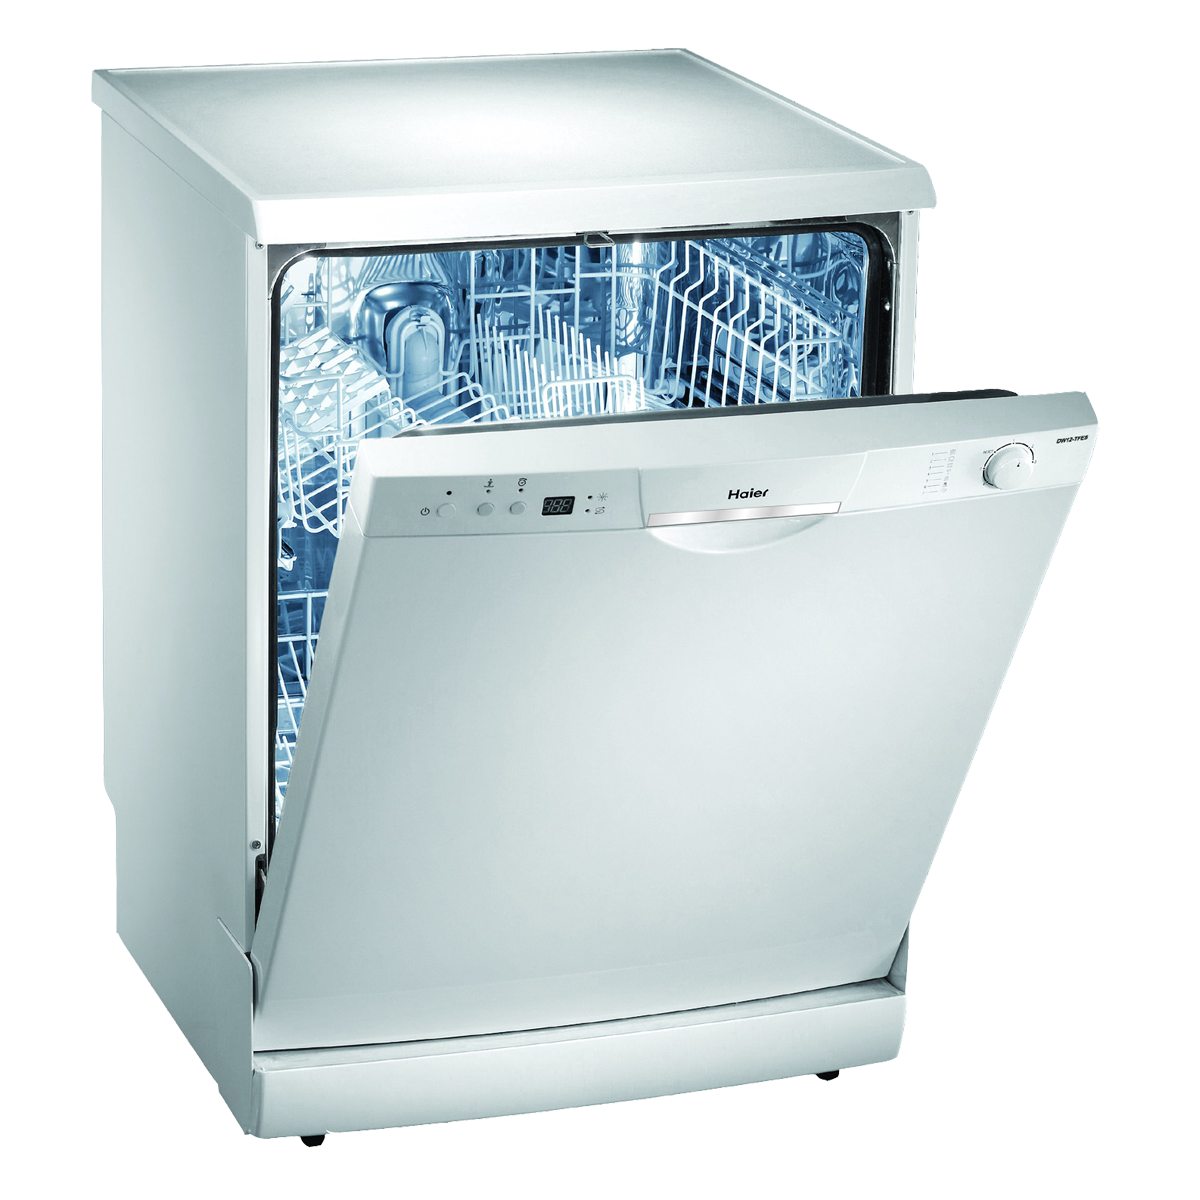 Dishwasher PNG Image File